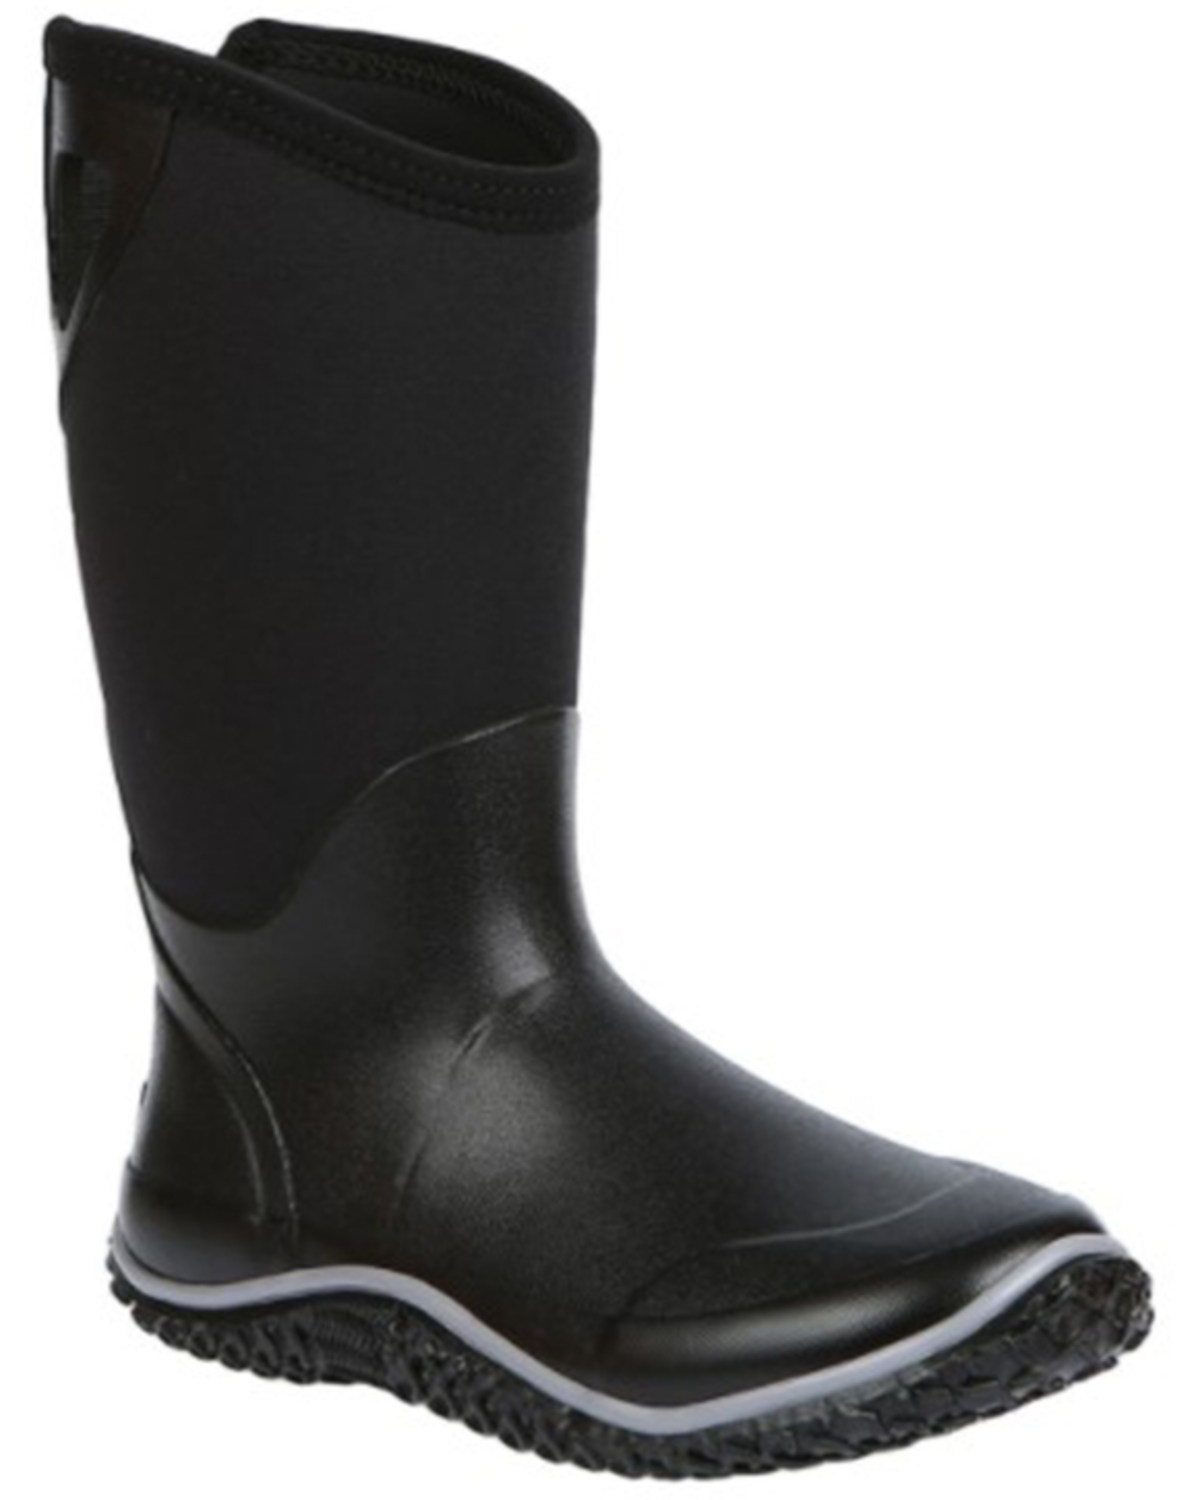 Northside Women's Astrid Waterproof Rubber Boots - Round Toe